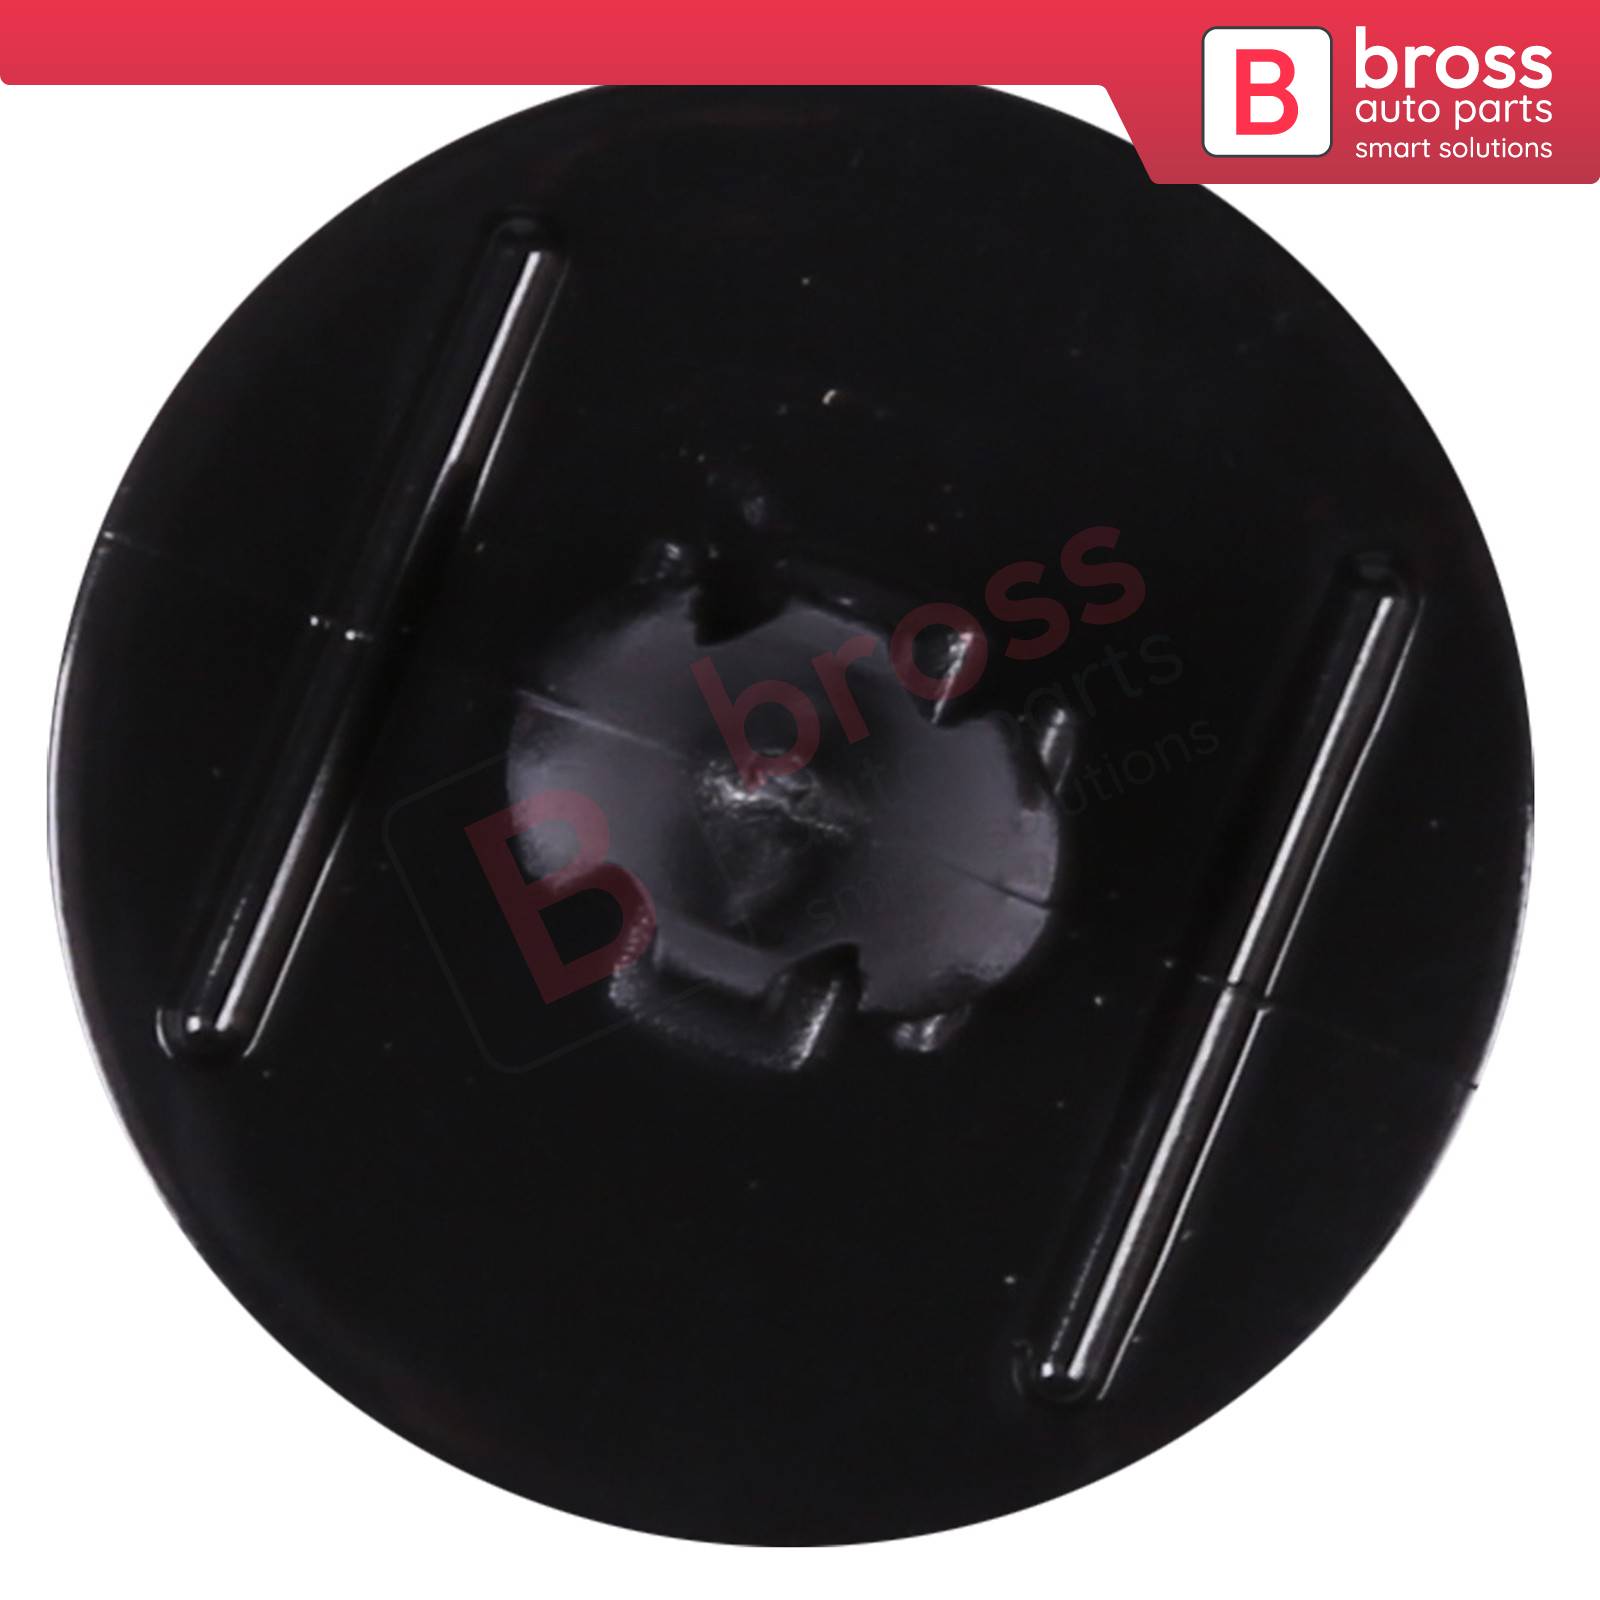 Bross Auto Parts LLC - BCF1653 10 Pieces Hood Fender Retainer for